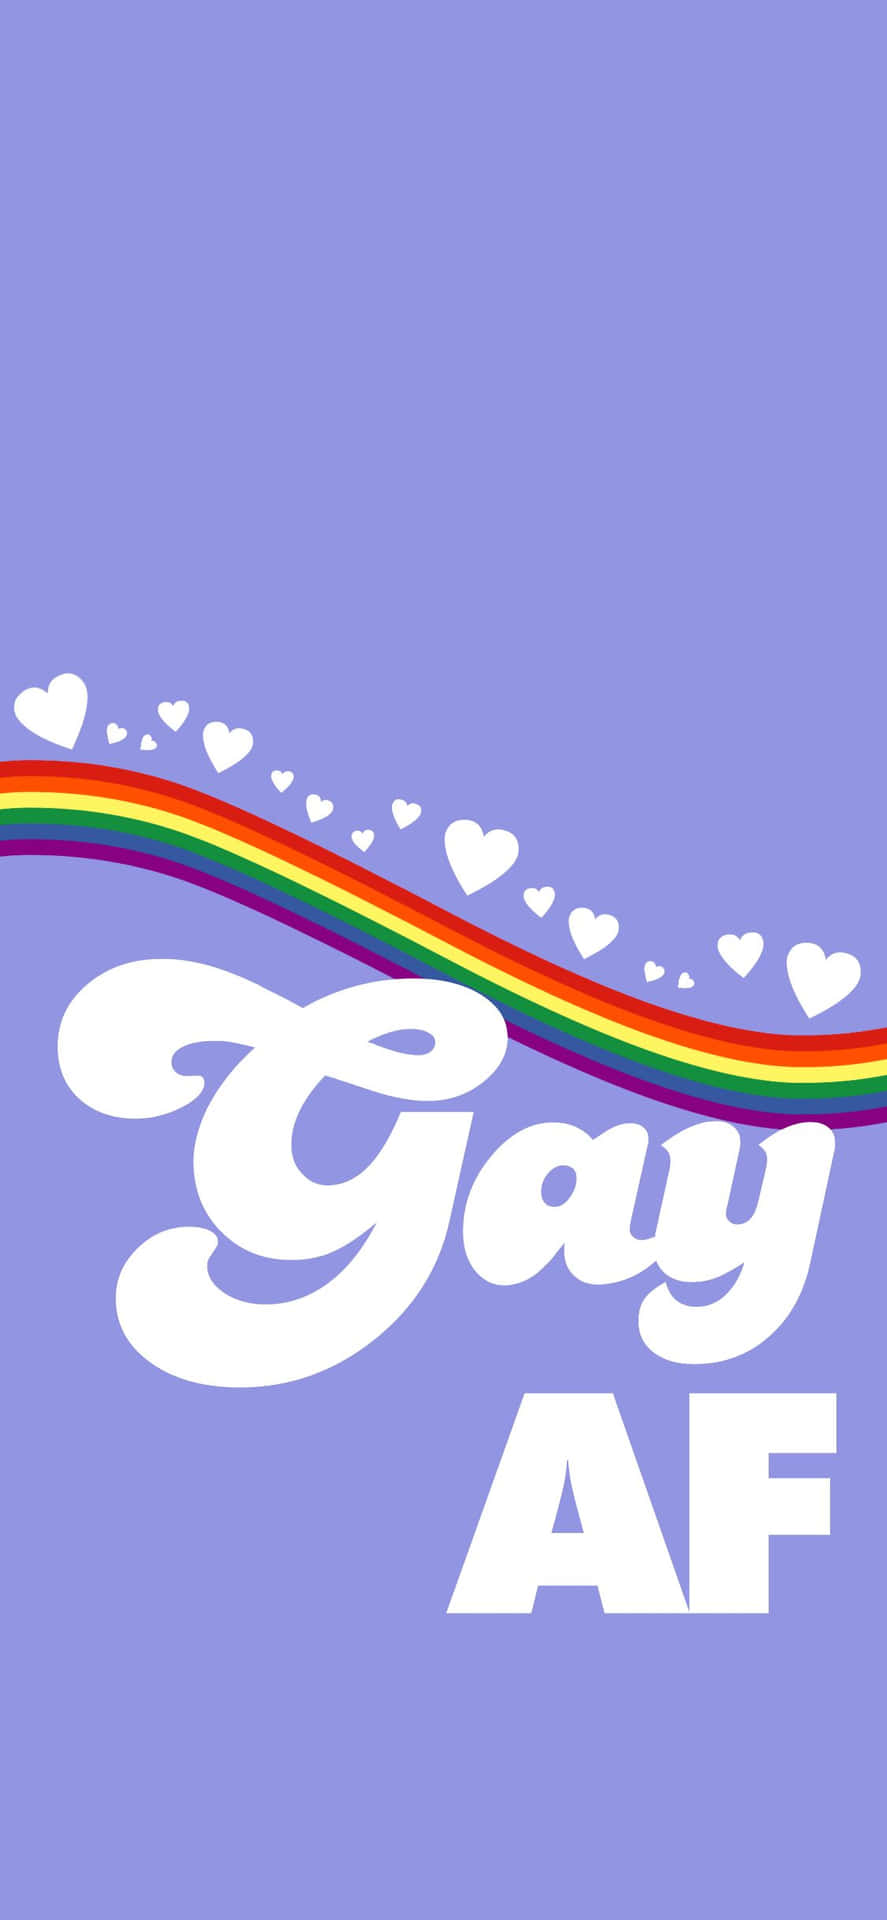 Pride&inclusivity: Celebrating the LGBT Community